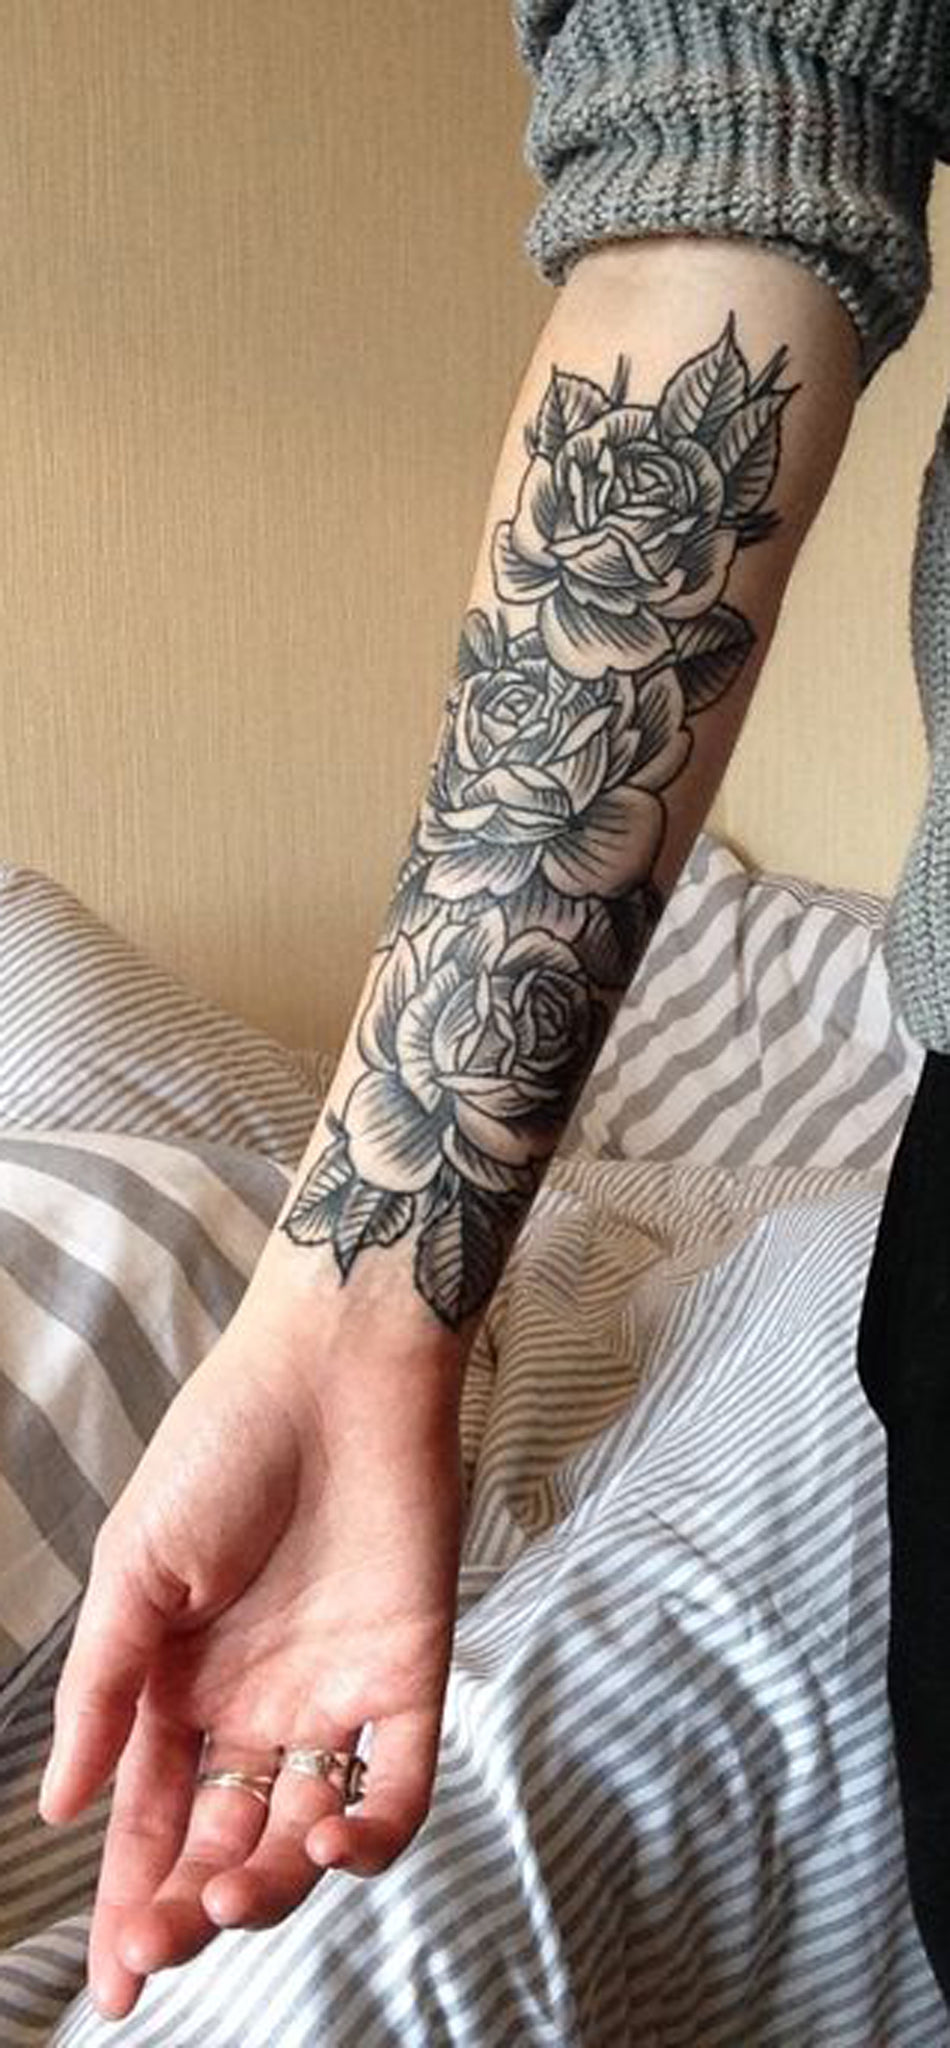 Black Rose Forearm Tattoo Ideas for Women - Vintage Traditional Floral Flower Arm Sleeve Tat - deas de tatuaje de antebrazo rosa para mujeres - www.MyBodiArt.com